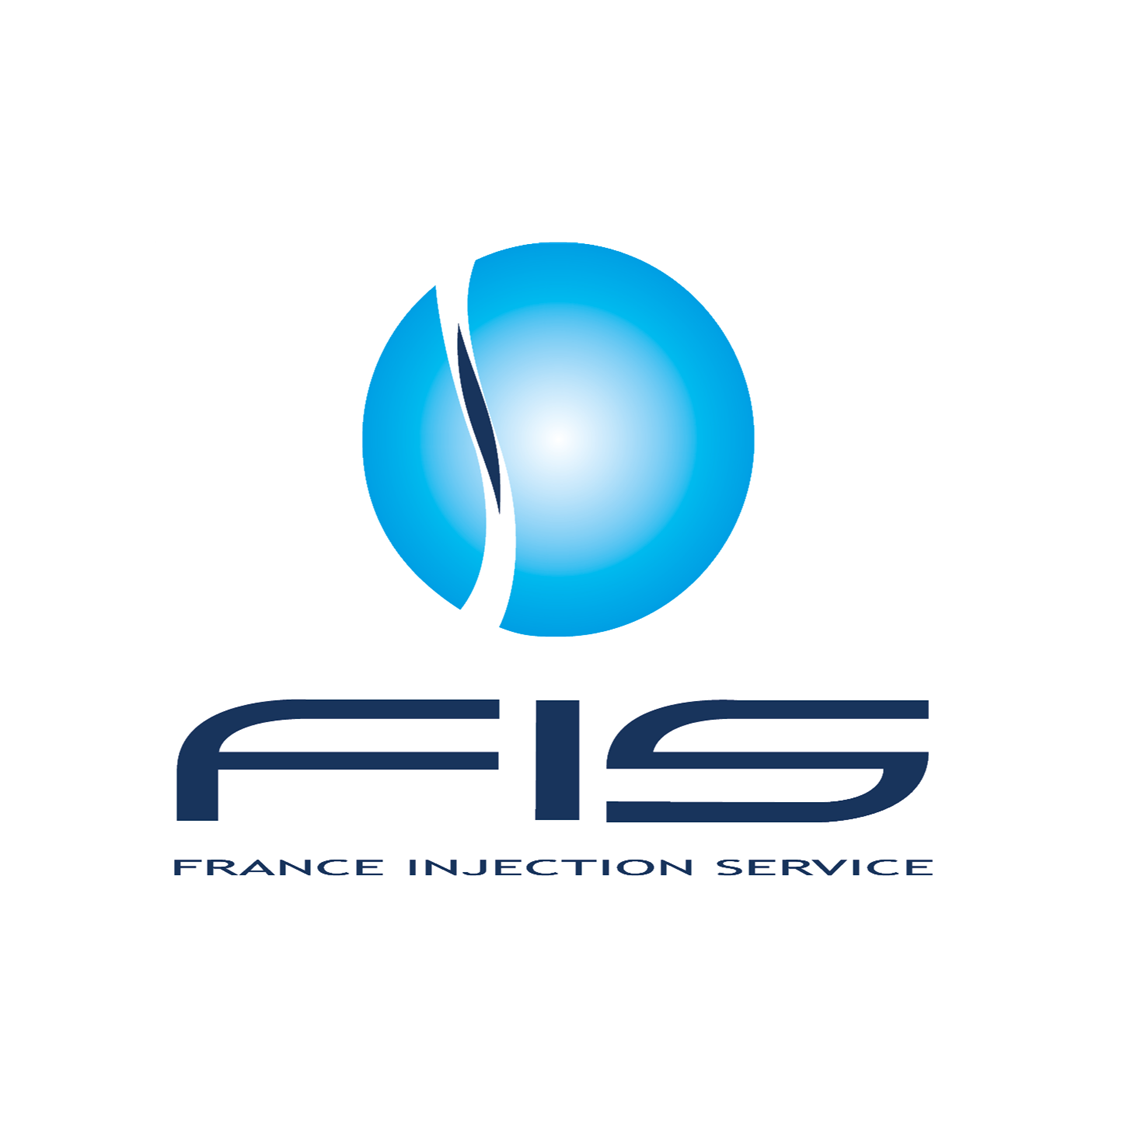 France Injection Service